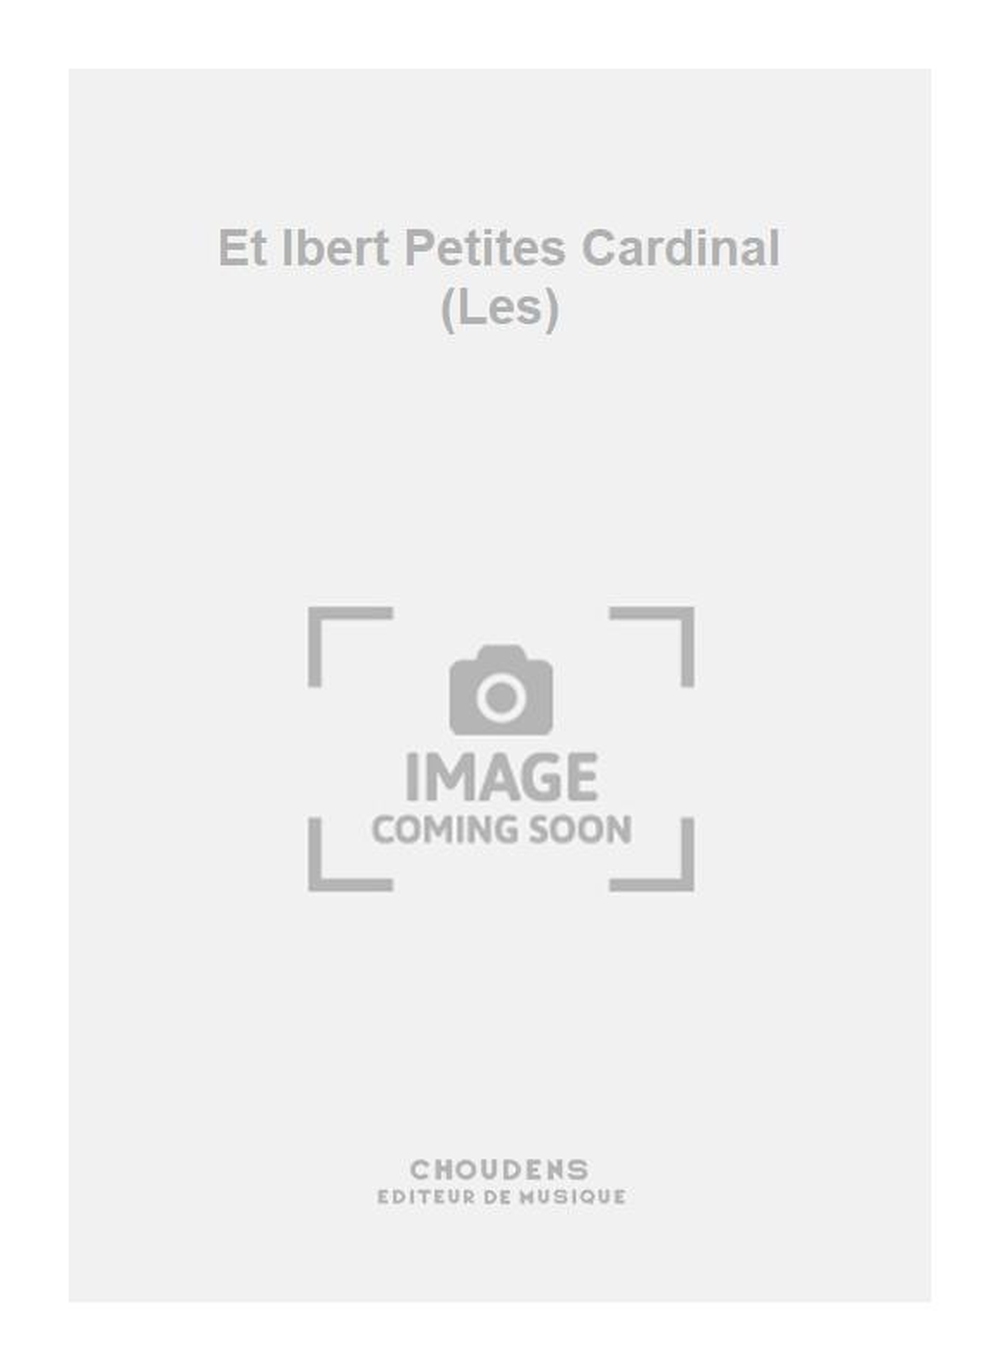 Honegger: Et Ibert Petites Cardinal (Les)